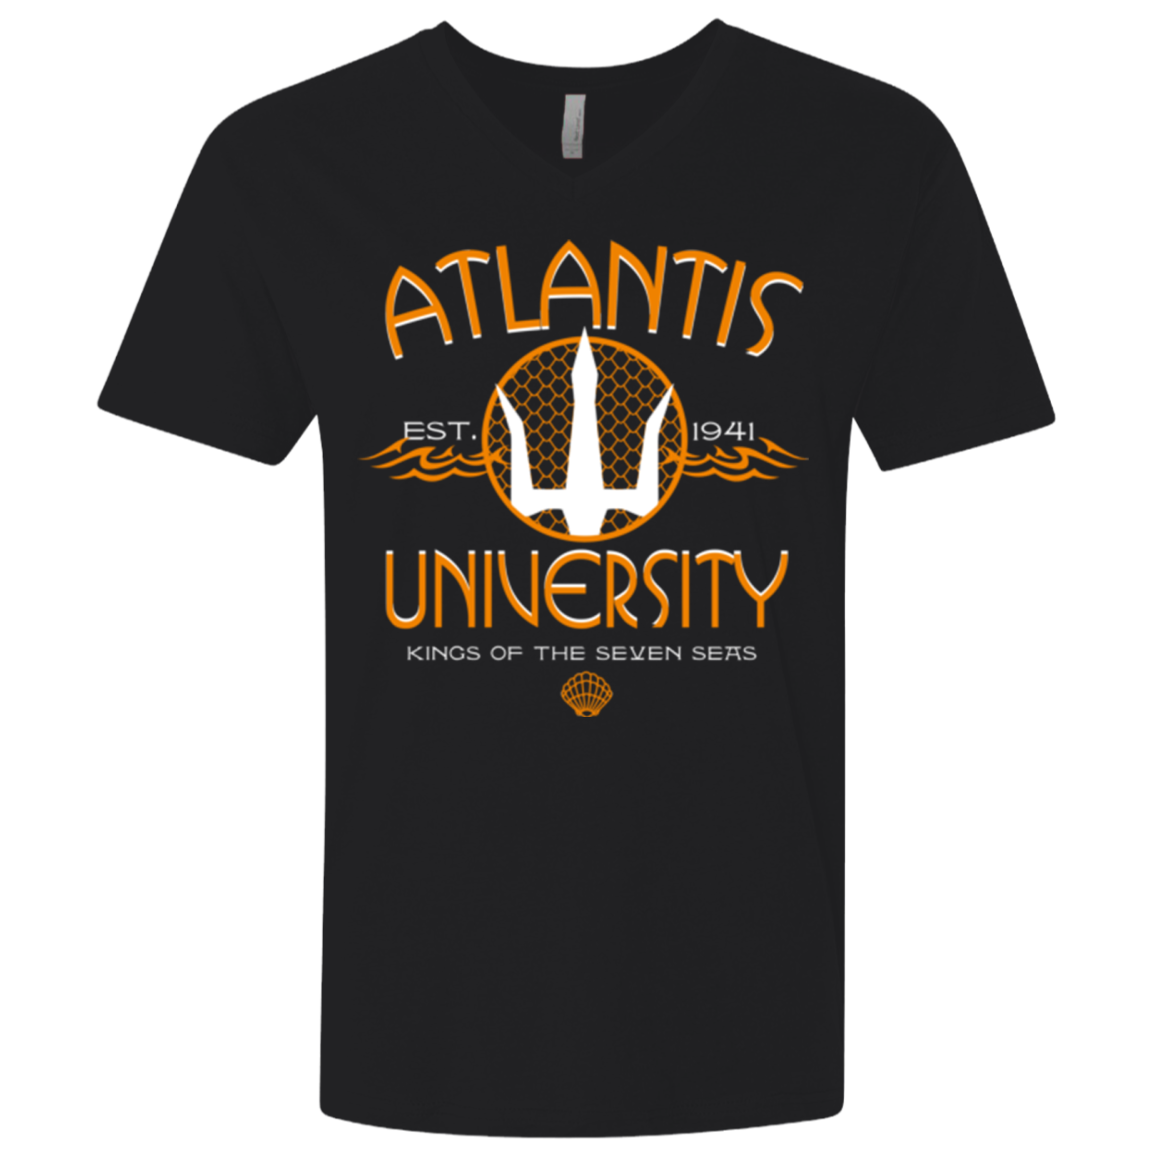 Atlantis University Men's Premium V-Neck